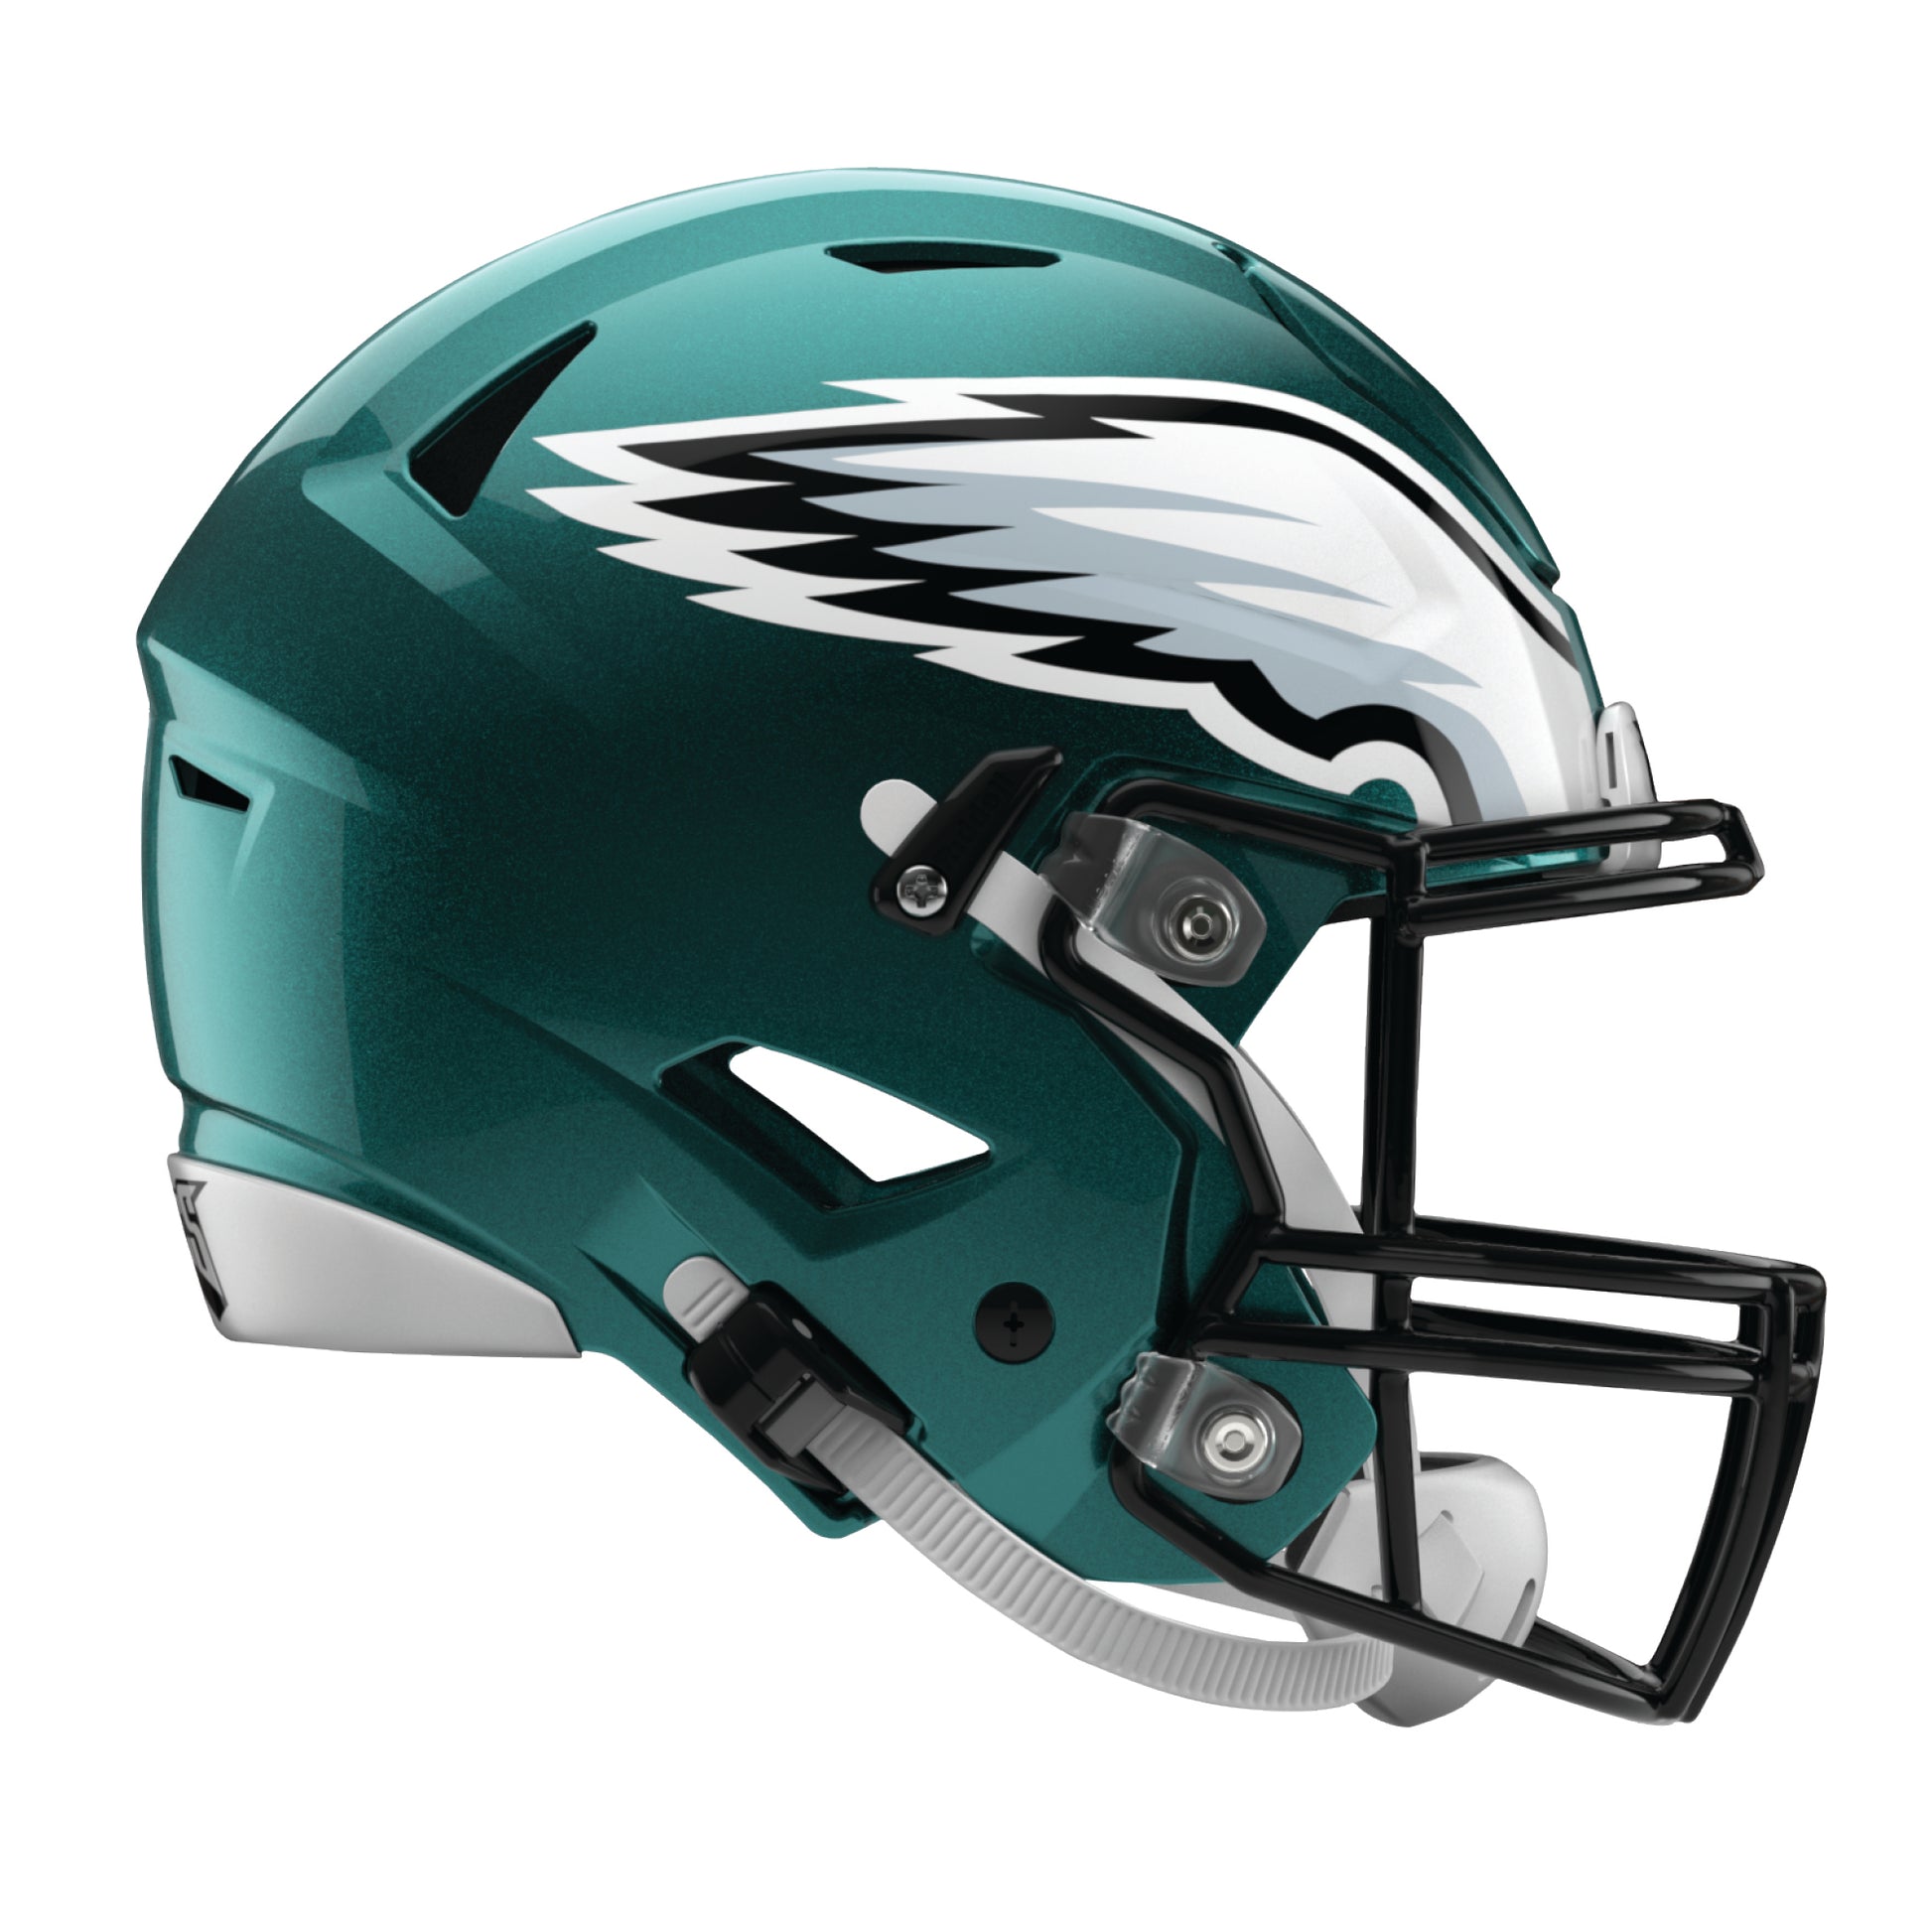 philadelphia eagles helmet